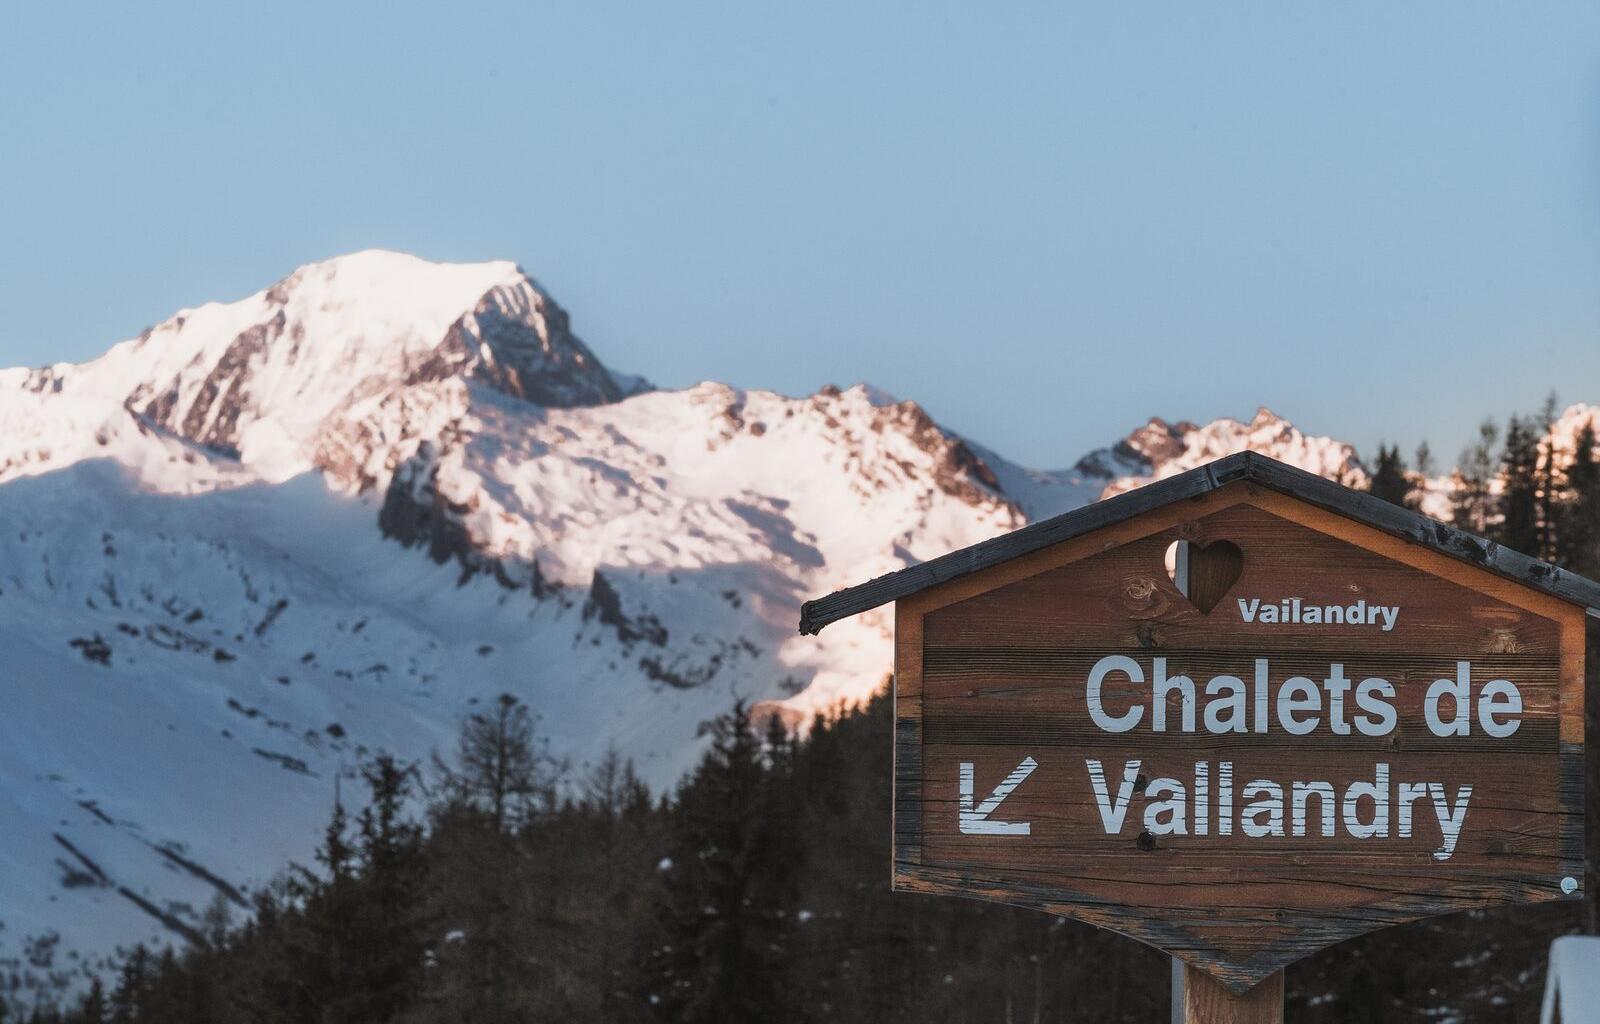 Chalets de Vallandry - Ekseption